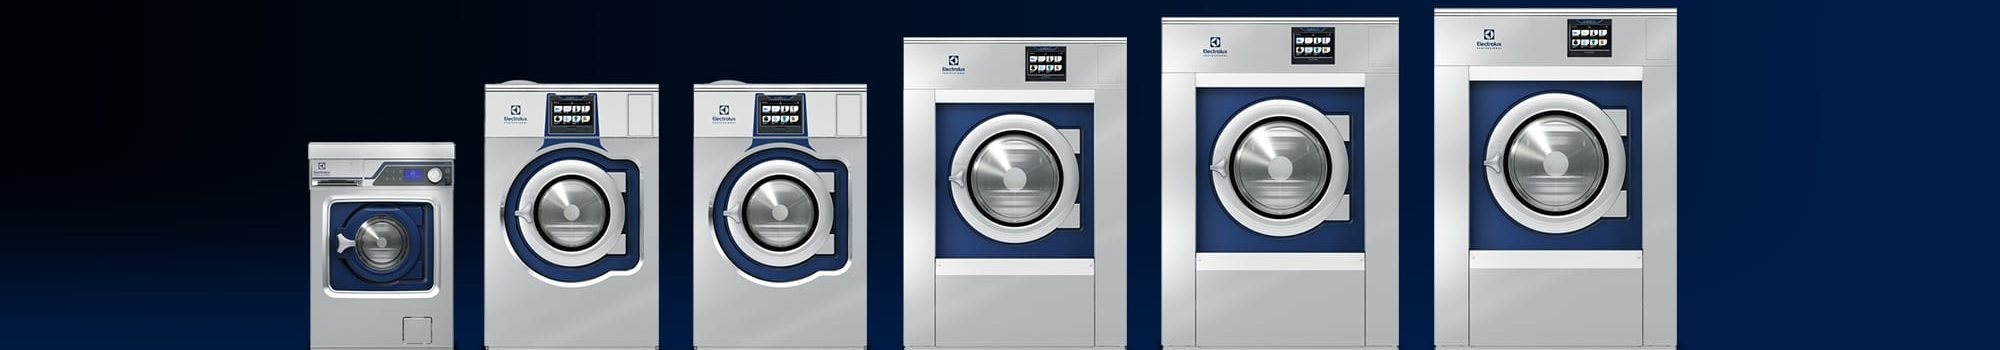 Line 6000 kommersielle vaskerimaskiner